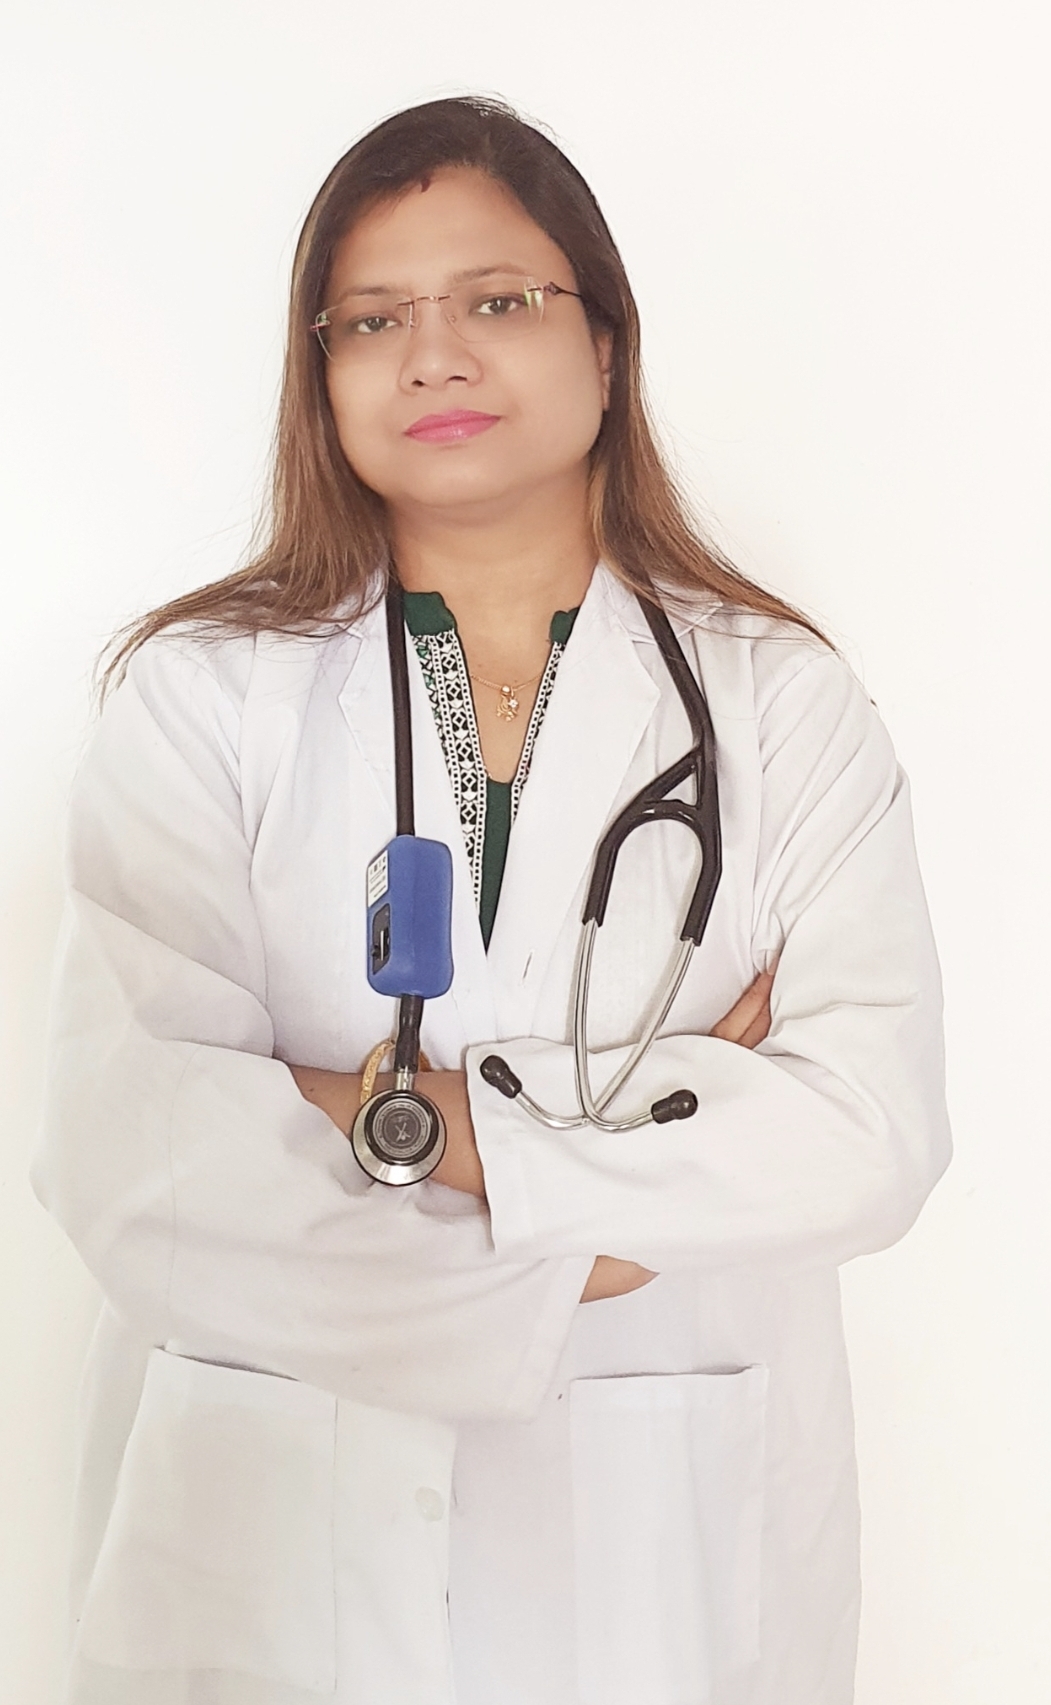 Dr. Madhu Lata Rana